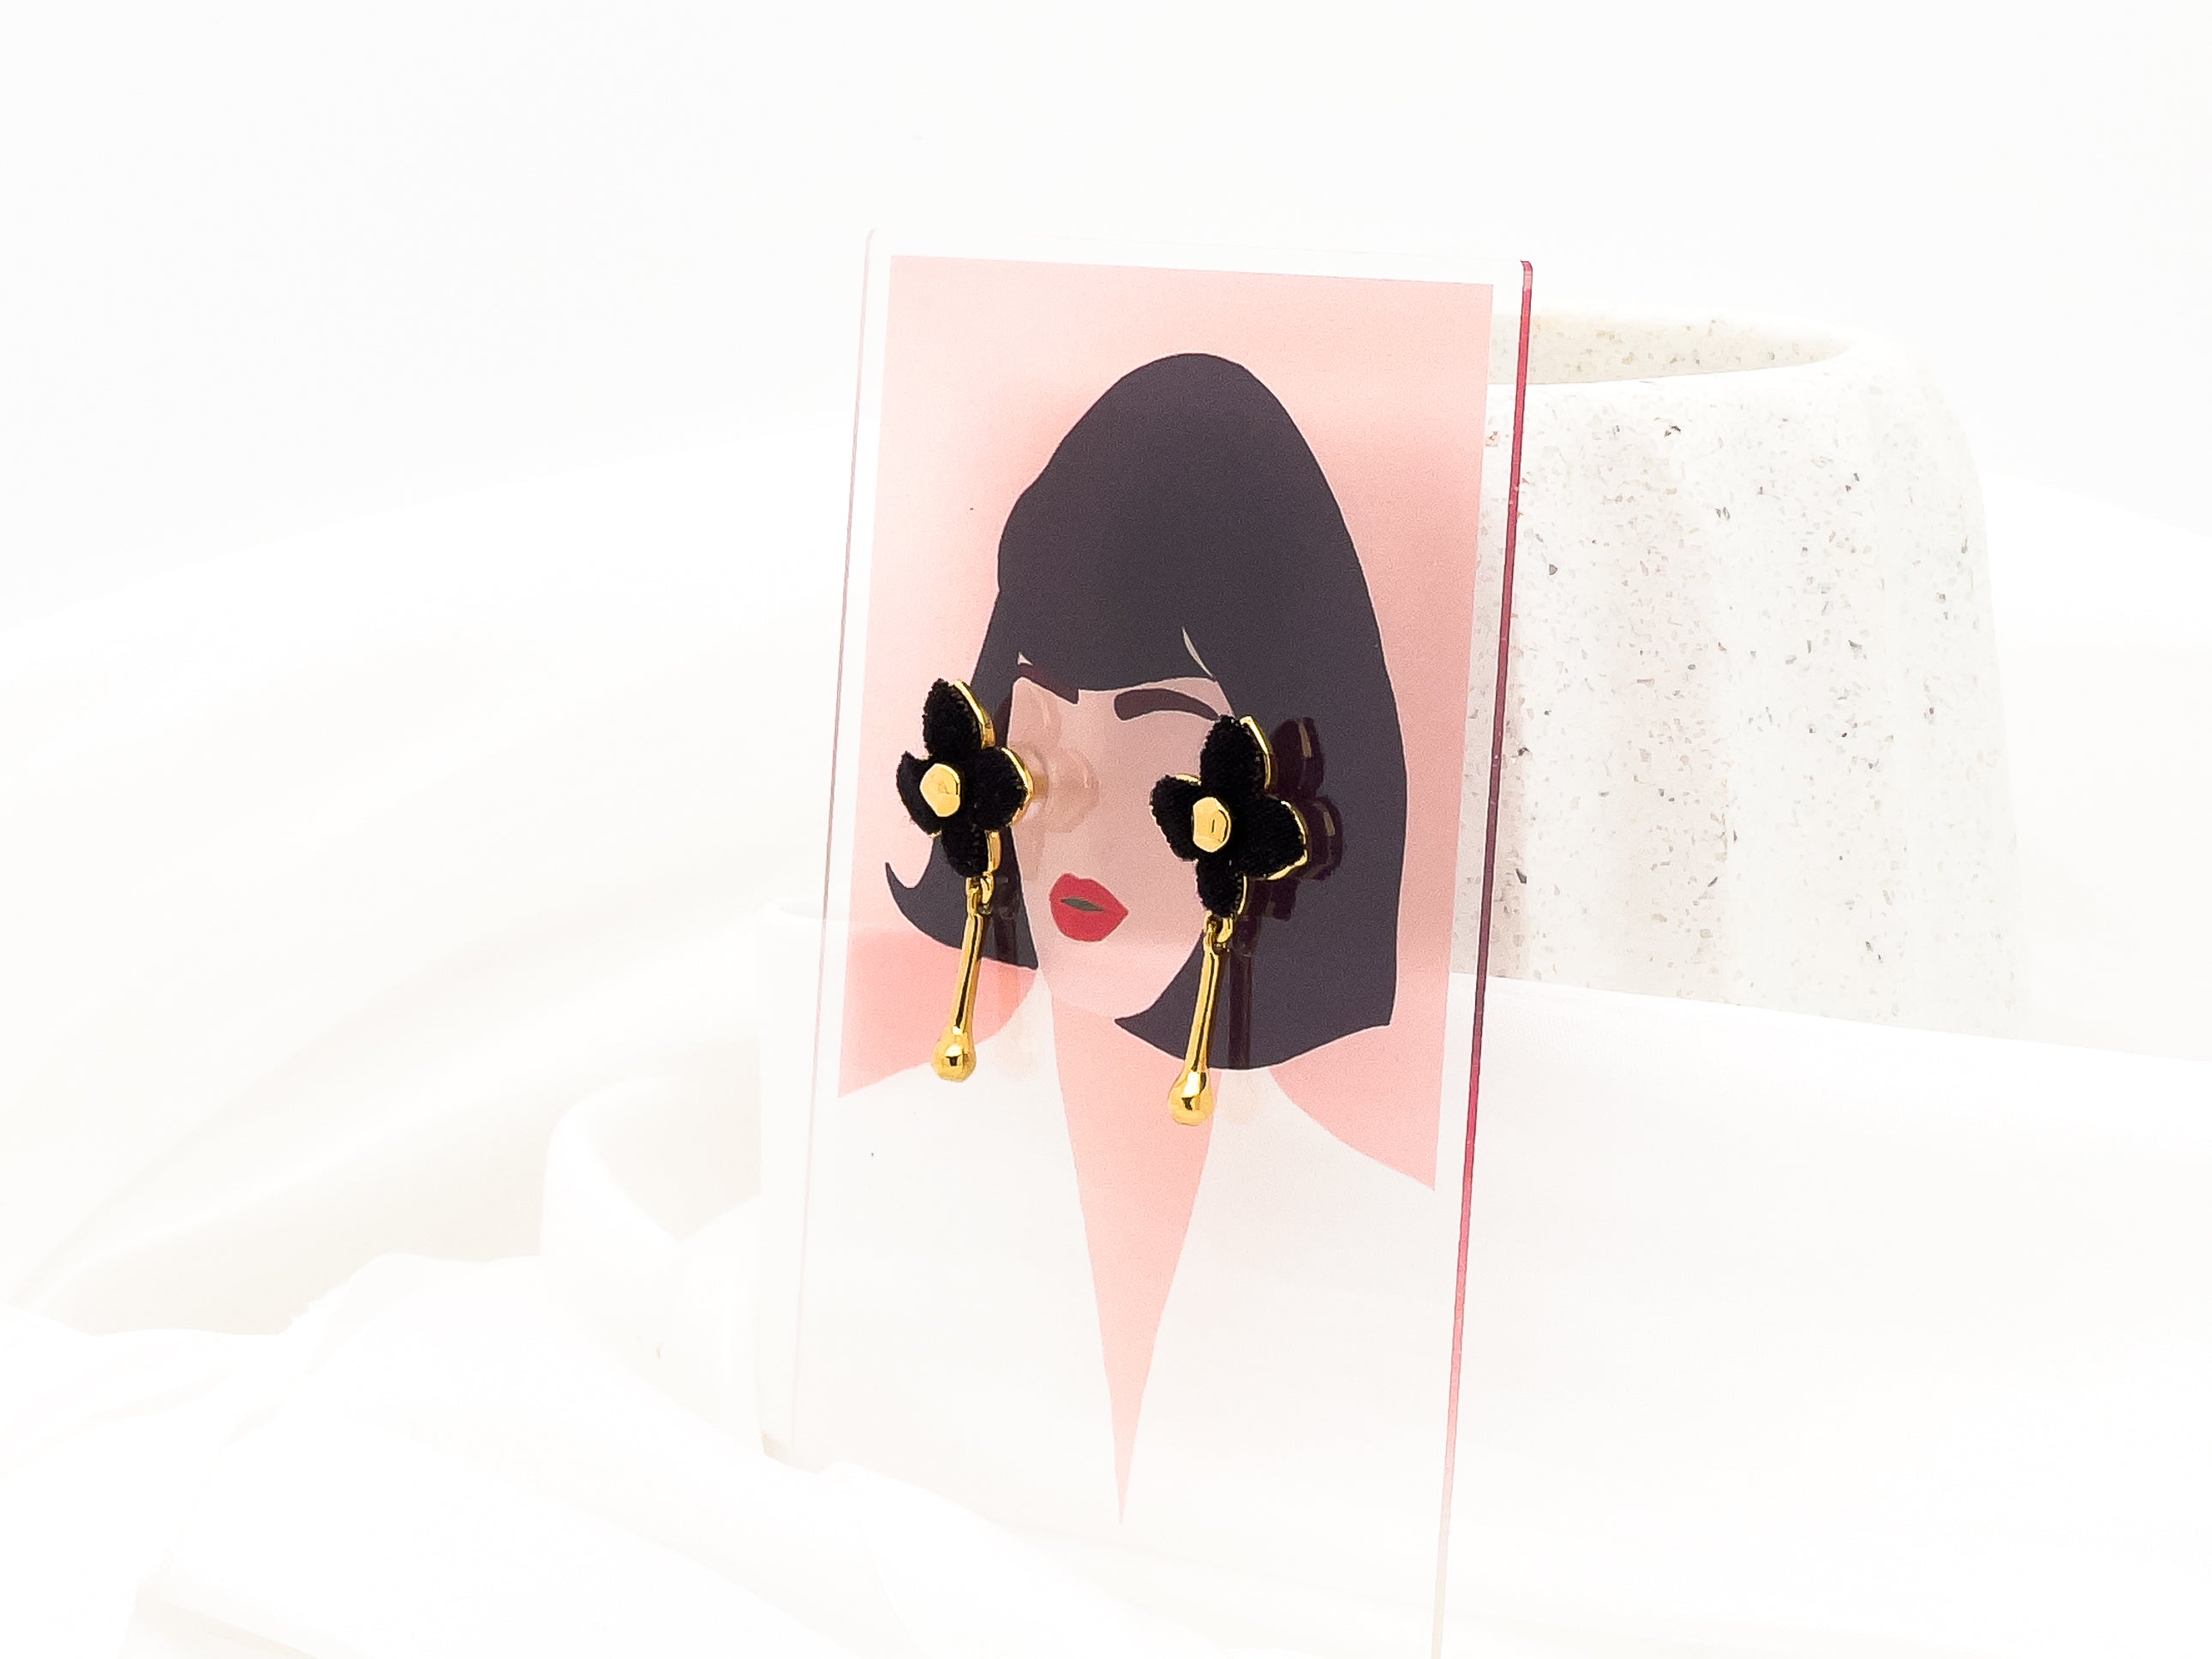 Vivienne Four Black Leaves Gold Drop Earrings  - Fashion Jewelry  | Chic Chic Bon